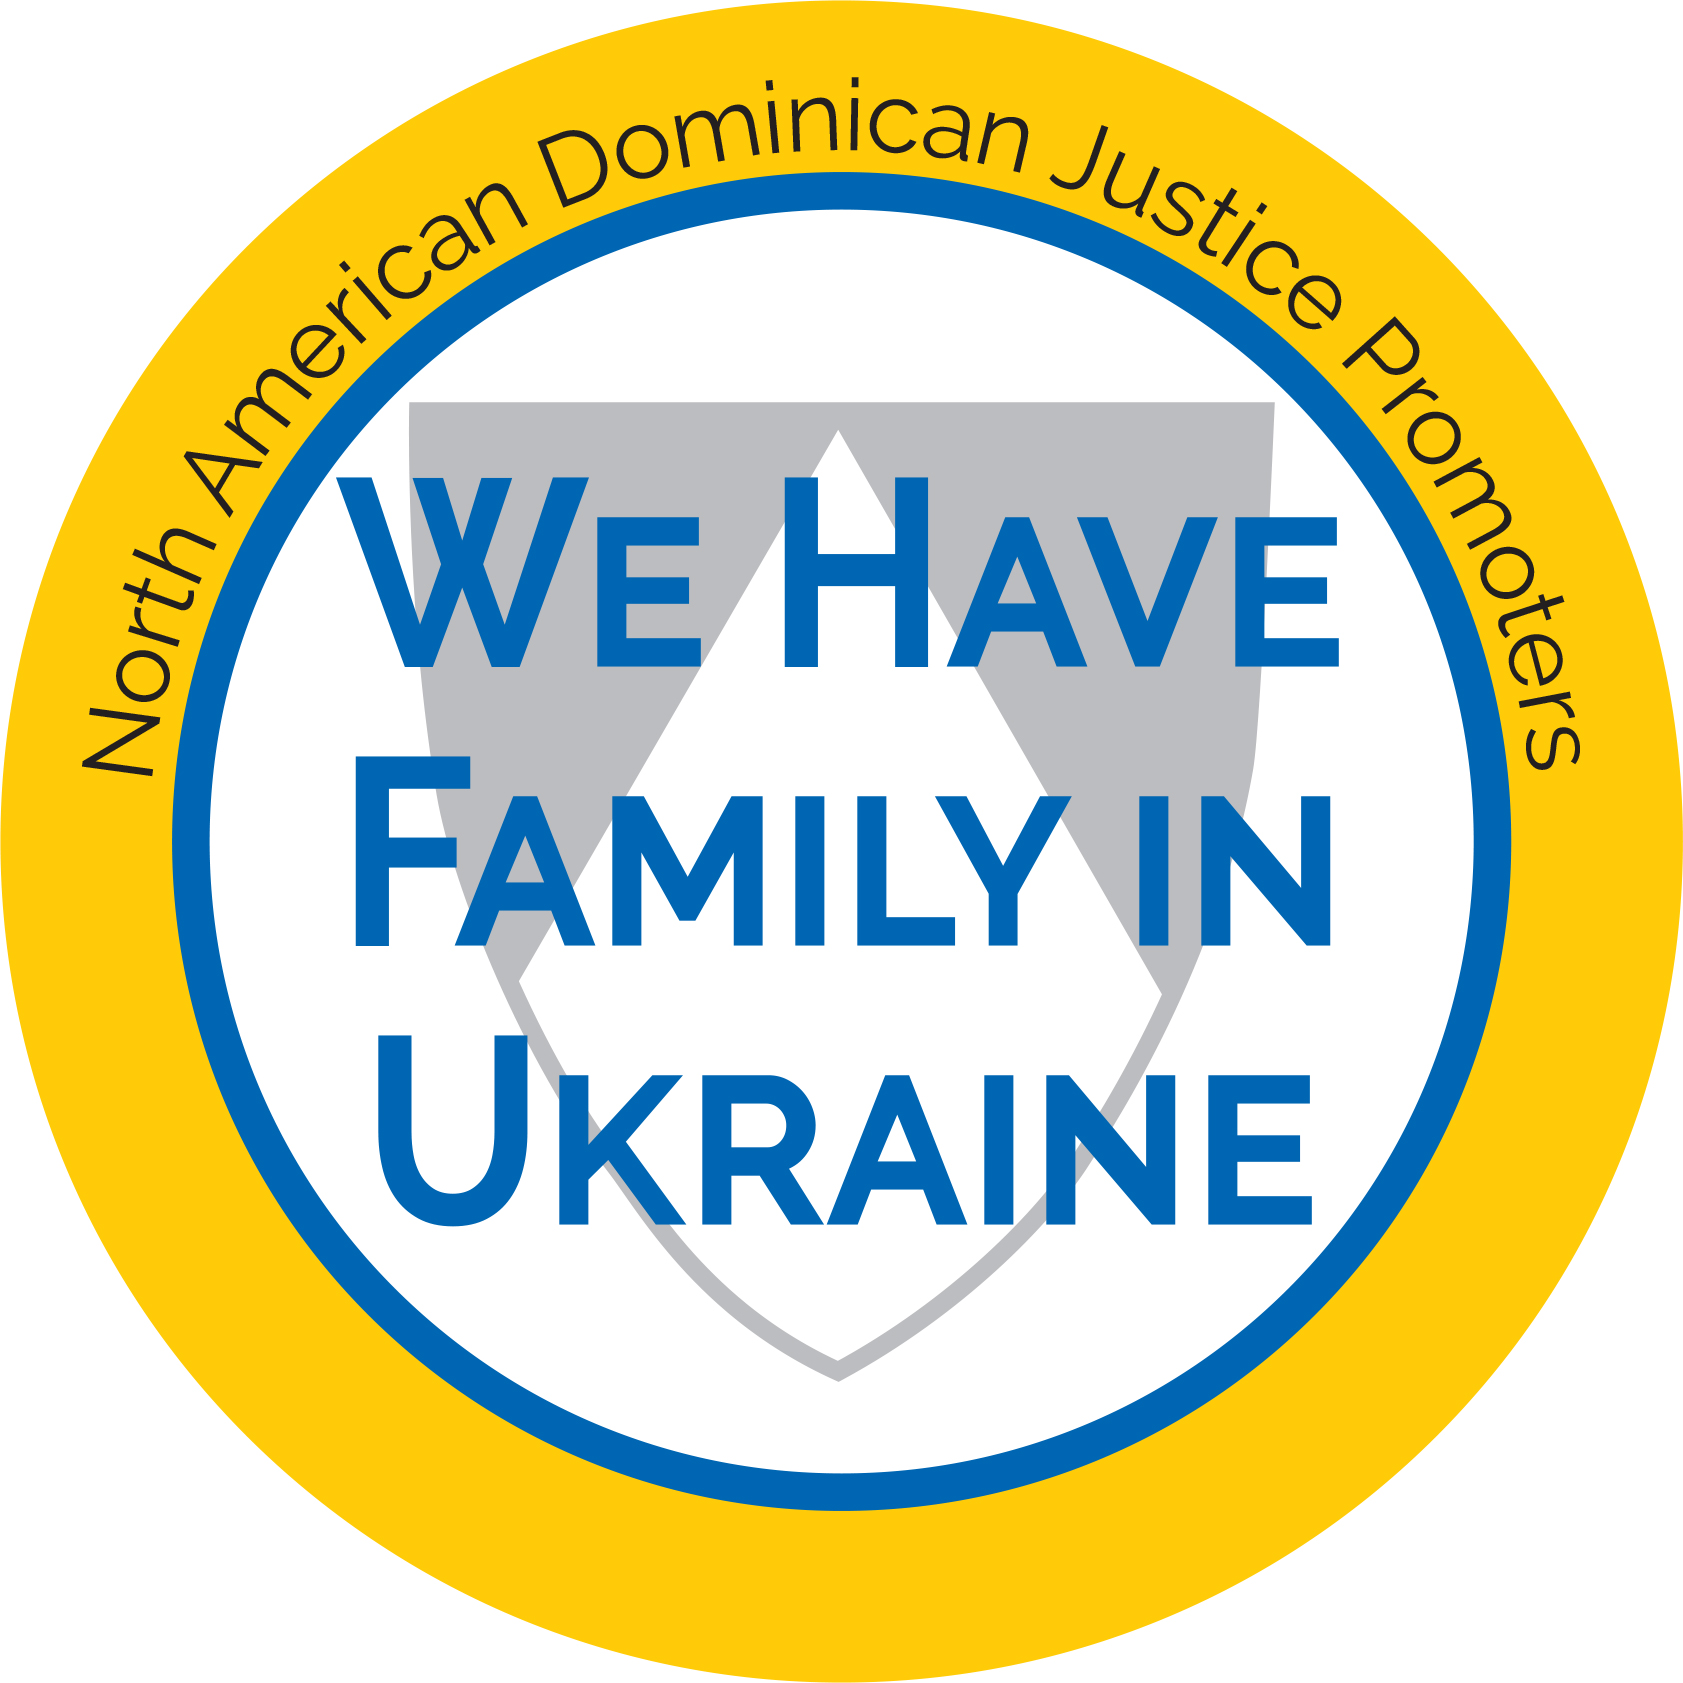 We have family in Ukraine